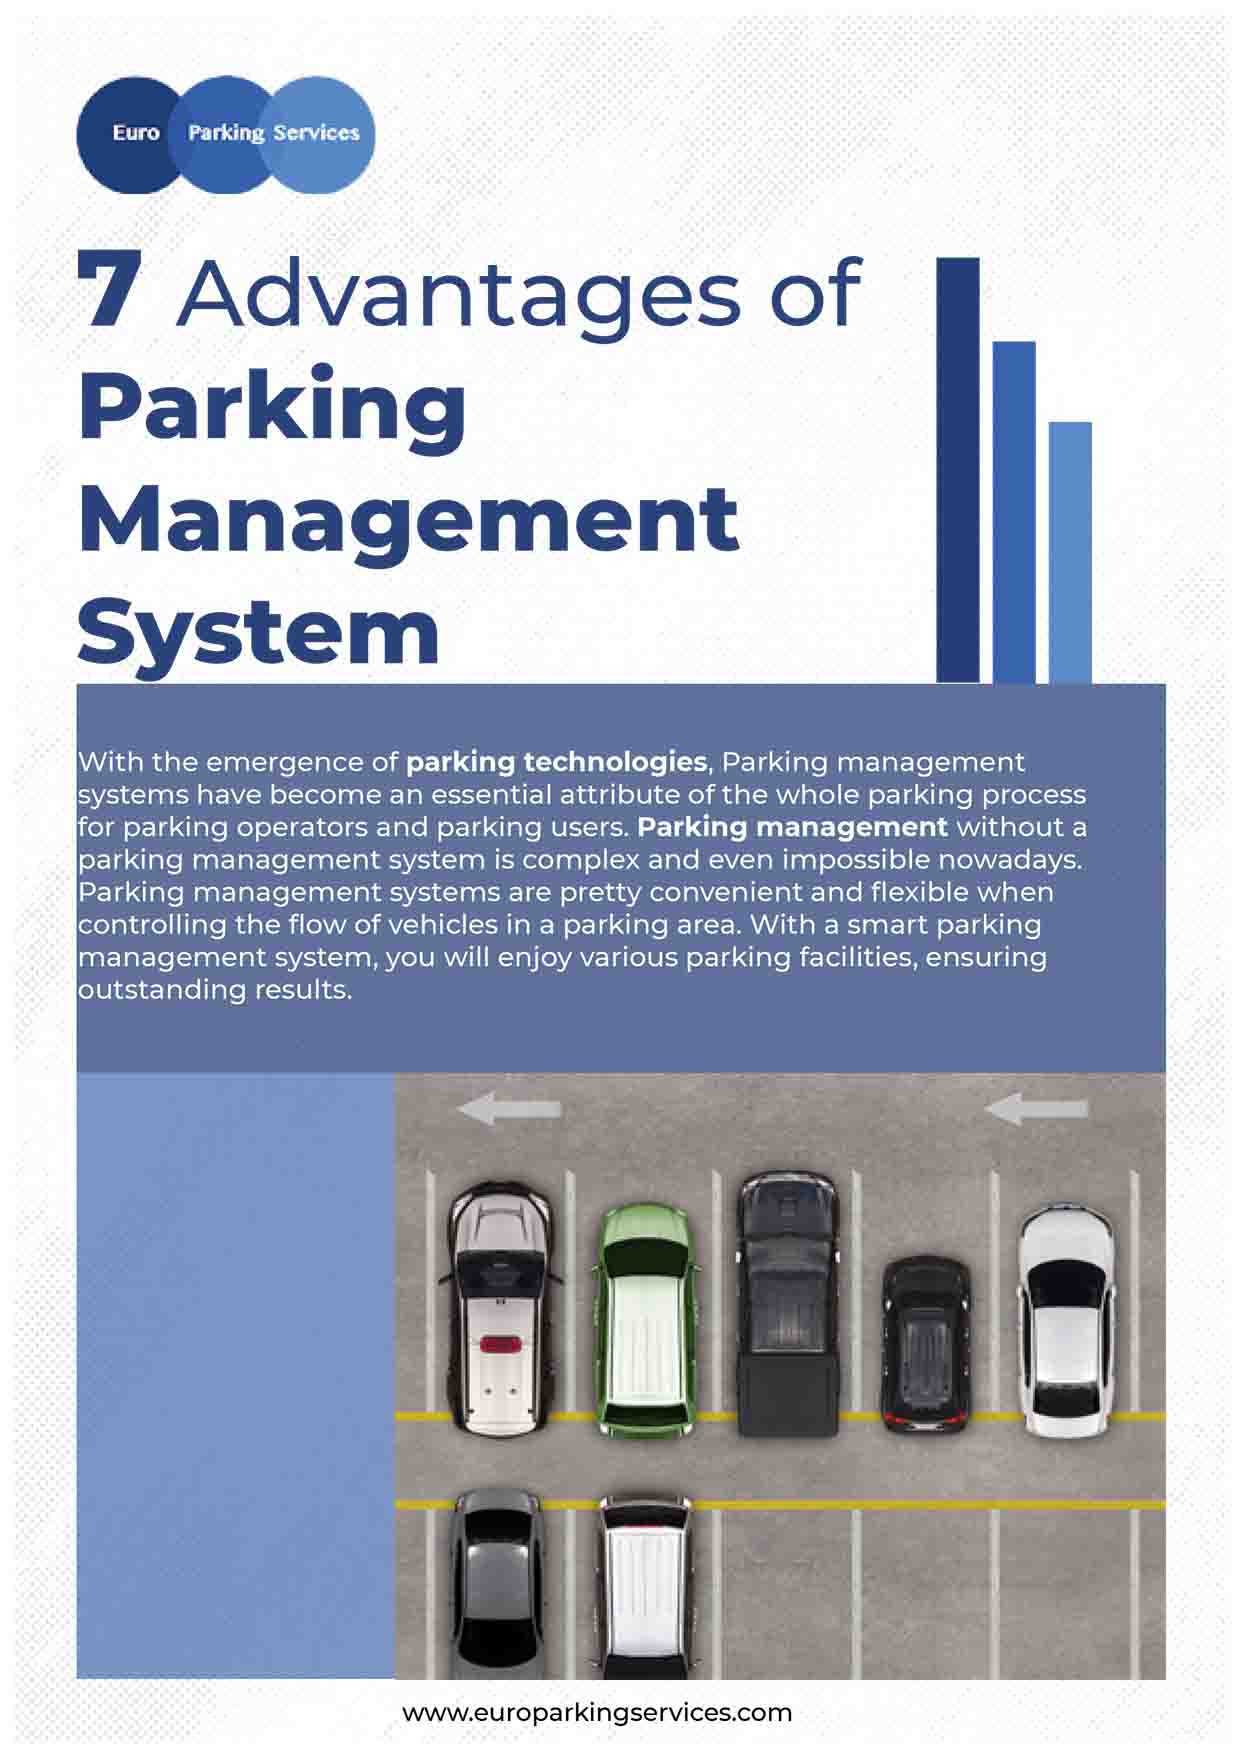 7 Advantages of Parking Management System